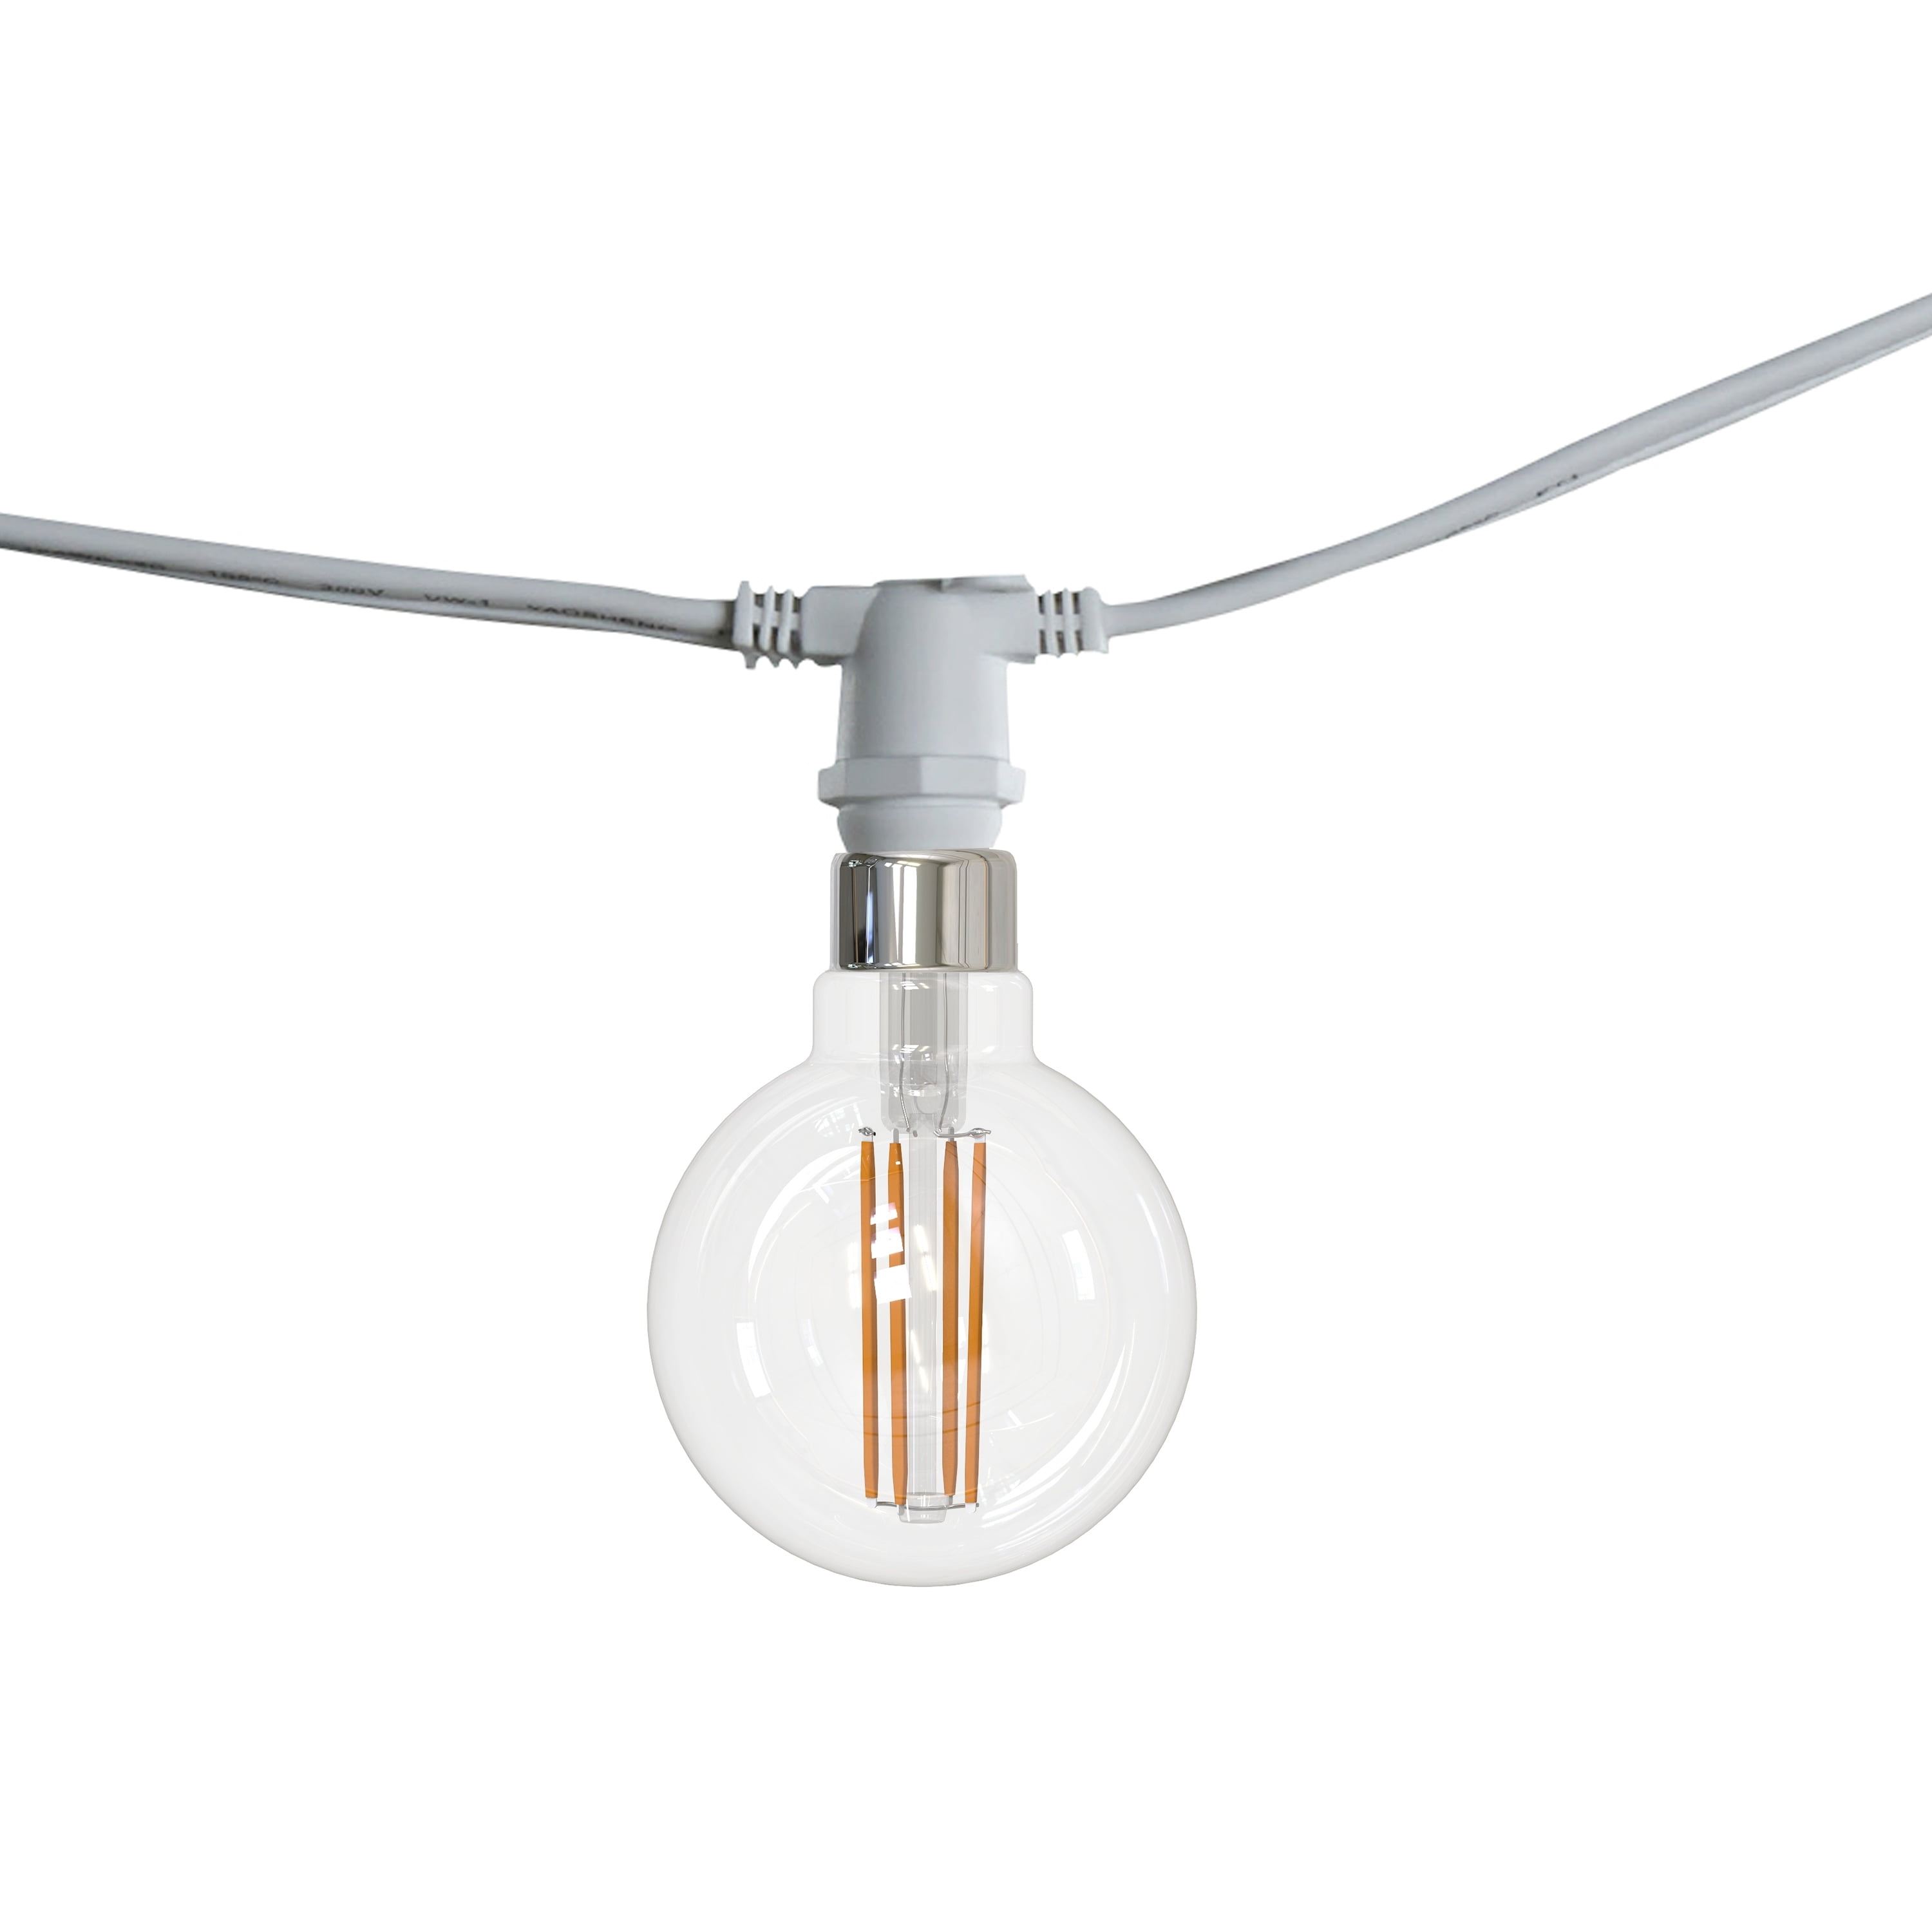 Picture of Bulbrite 810130 25 ft. 15-Socket E12 Decorative String Light Kit with Clear LED Globe G16 Bulbs, 40 watt Equivalent, White